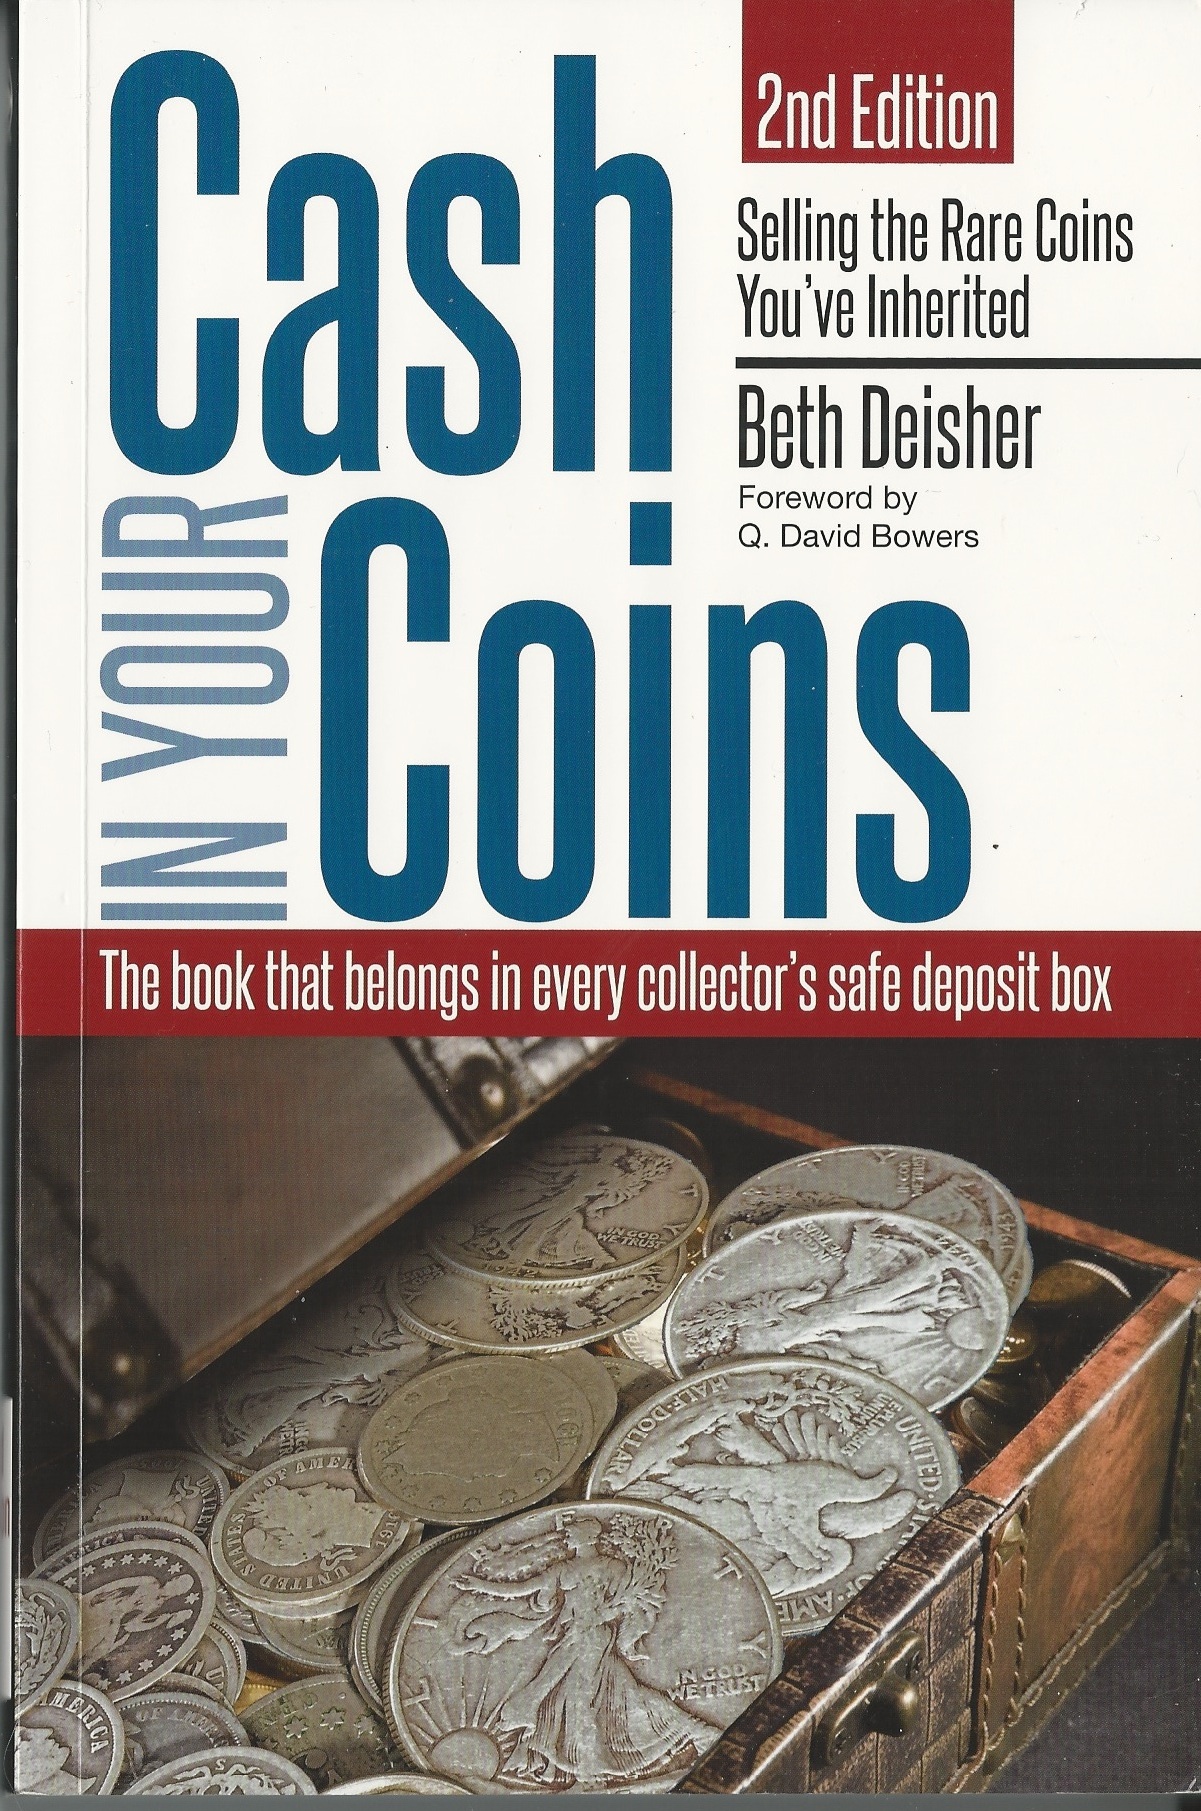 Deisher 2nd Edition copy.jpg